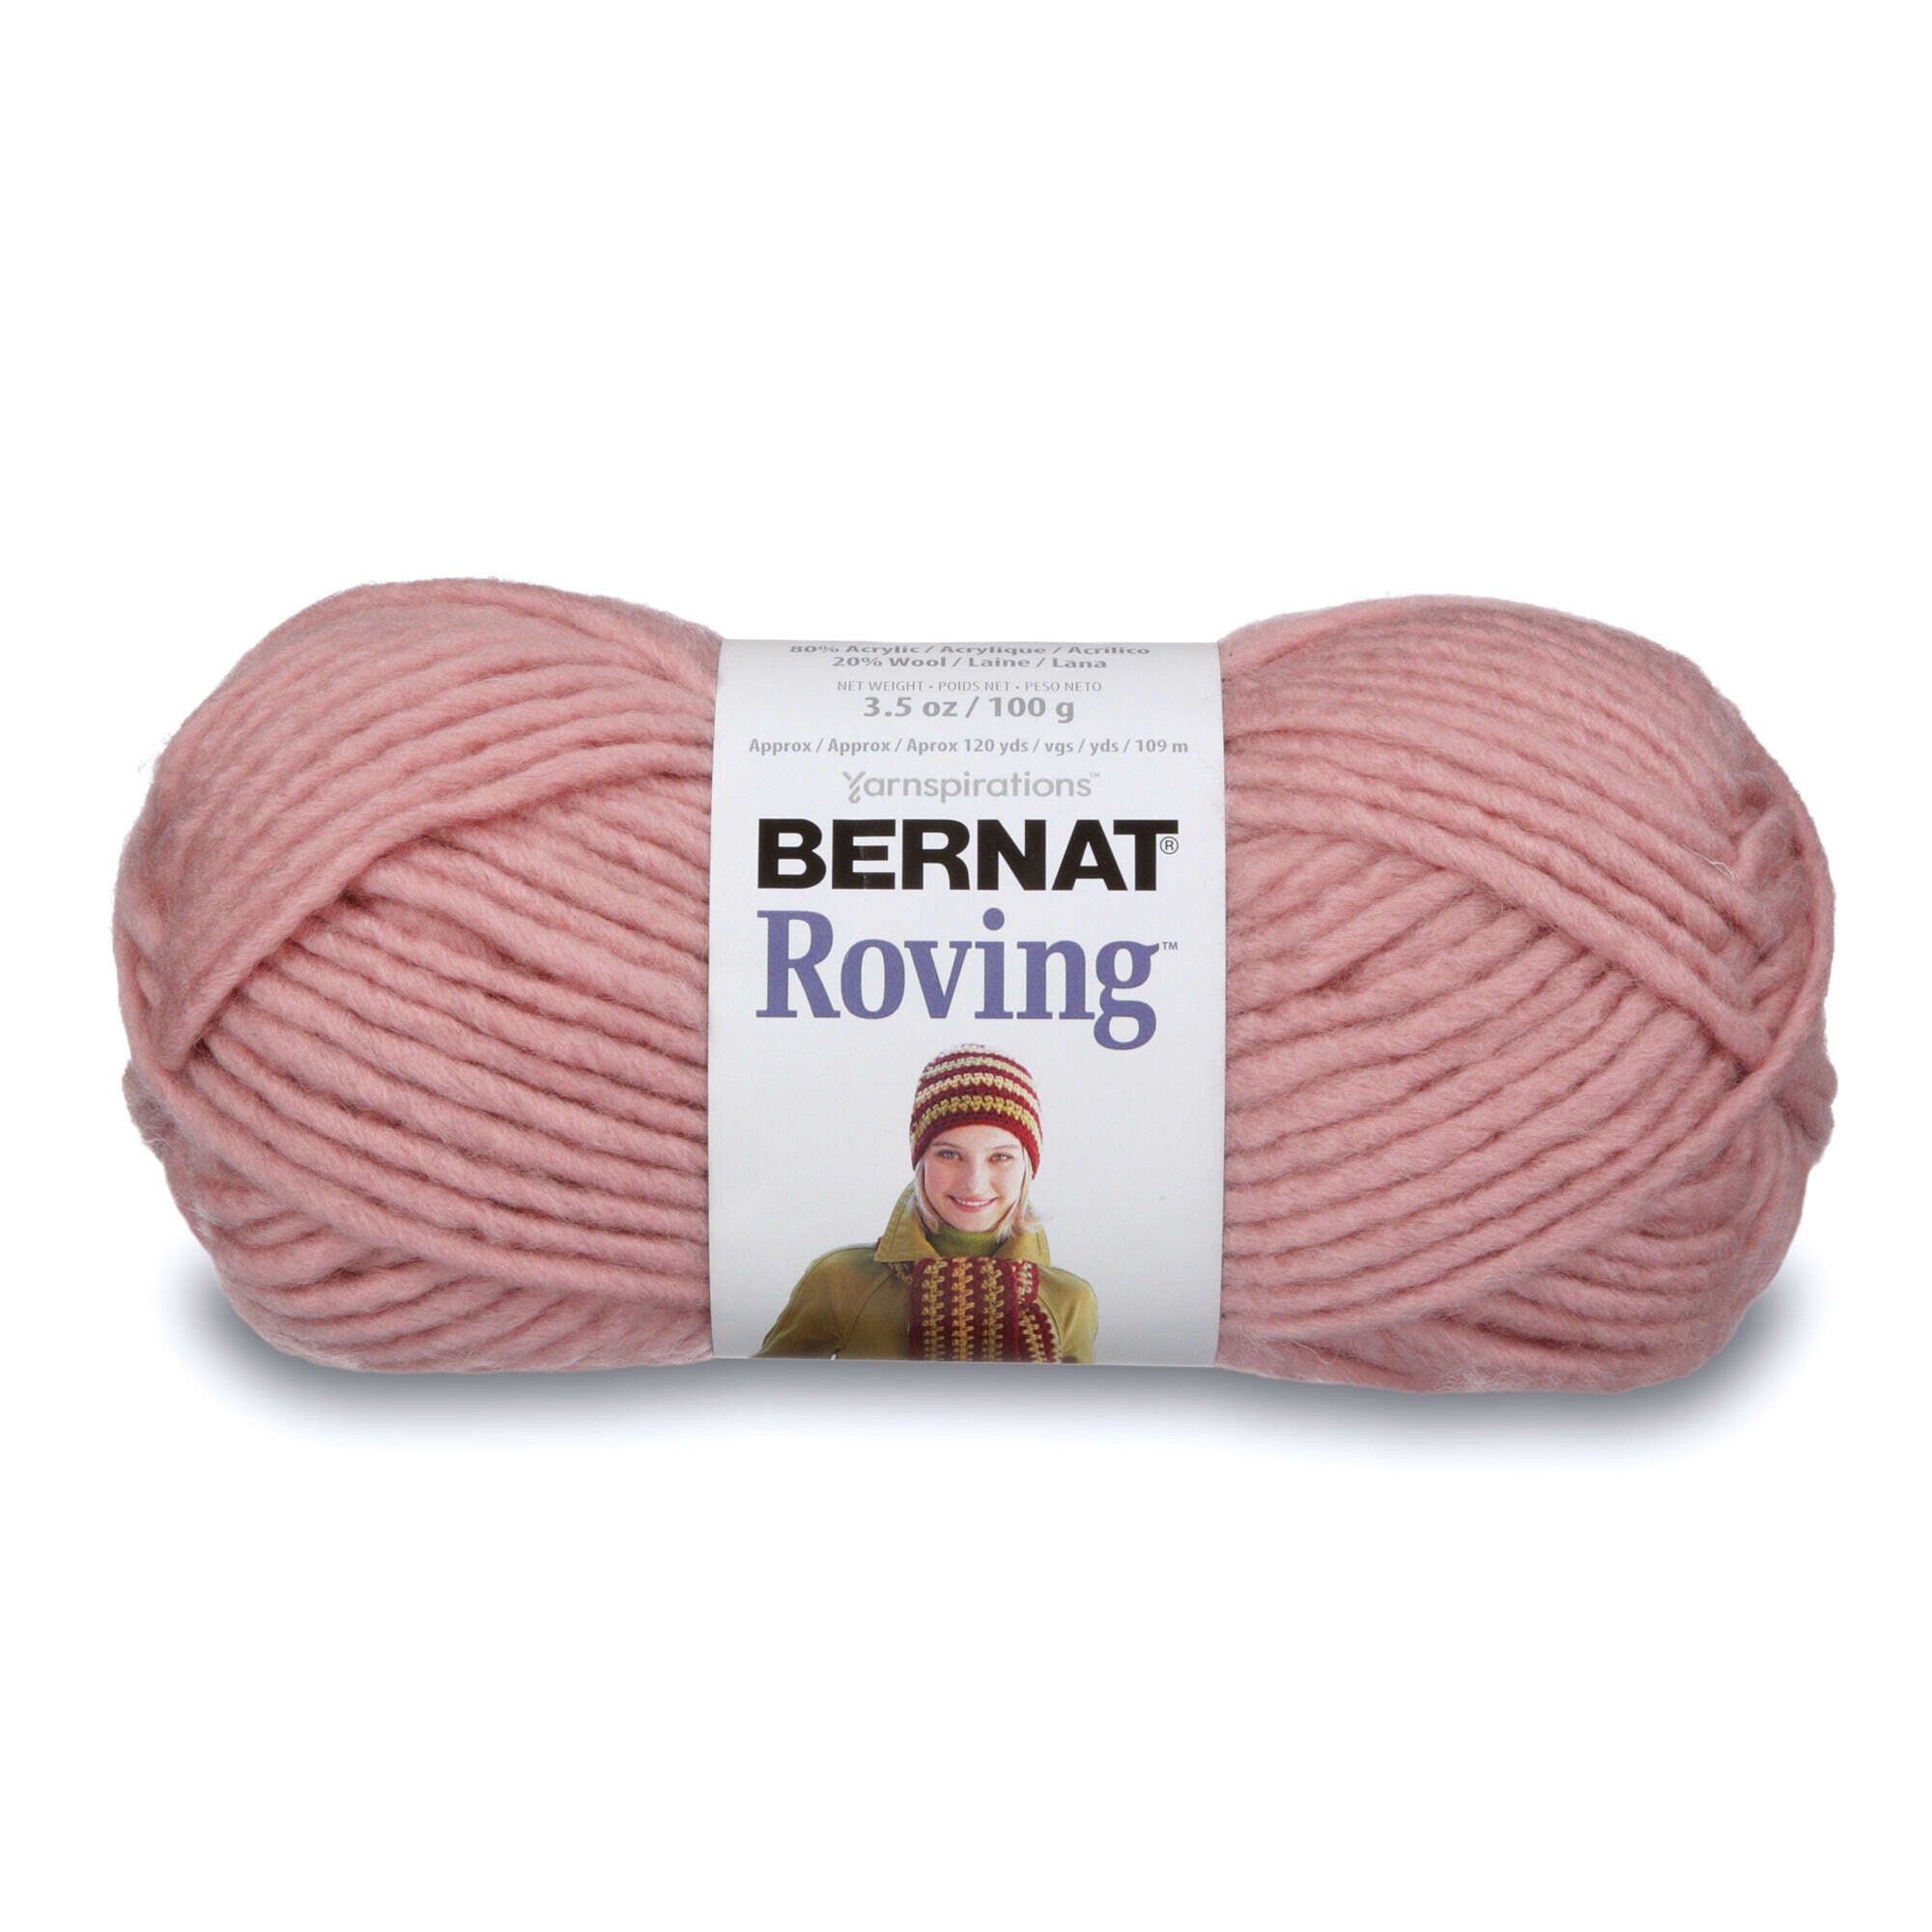 Bernat Roving Yarn - Clearance Shades* | Yarnspirations